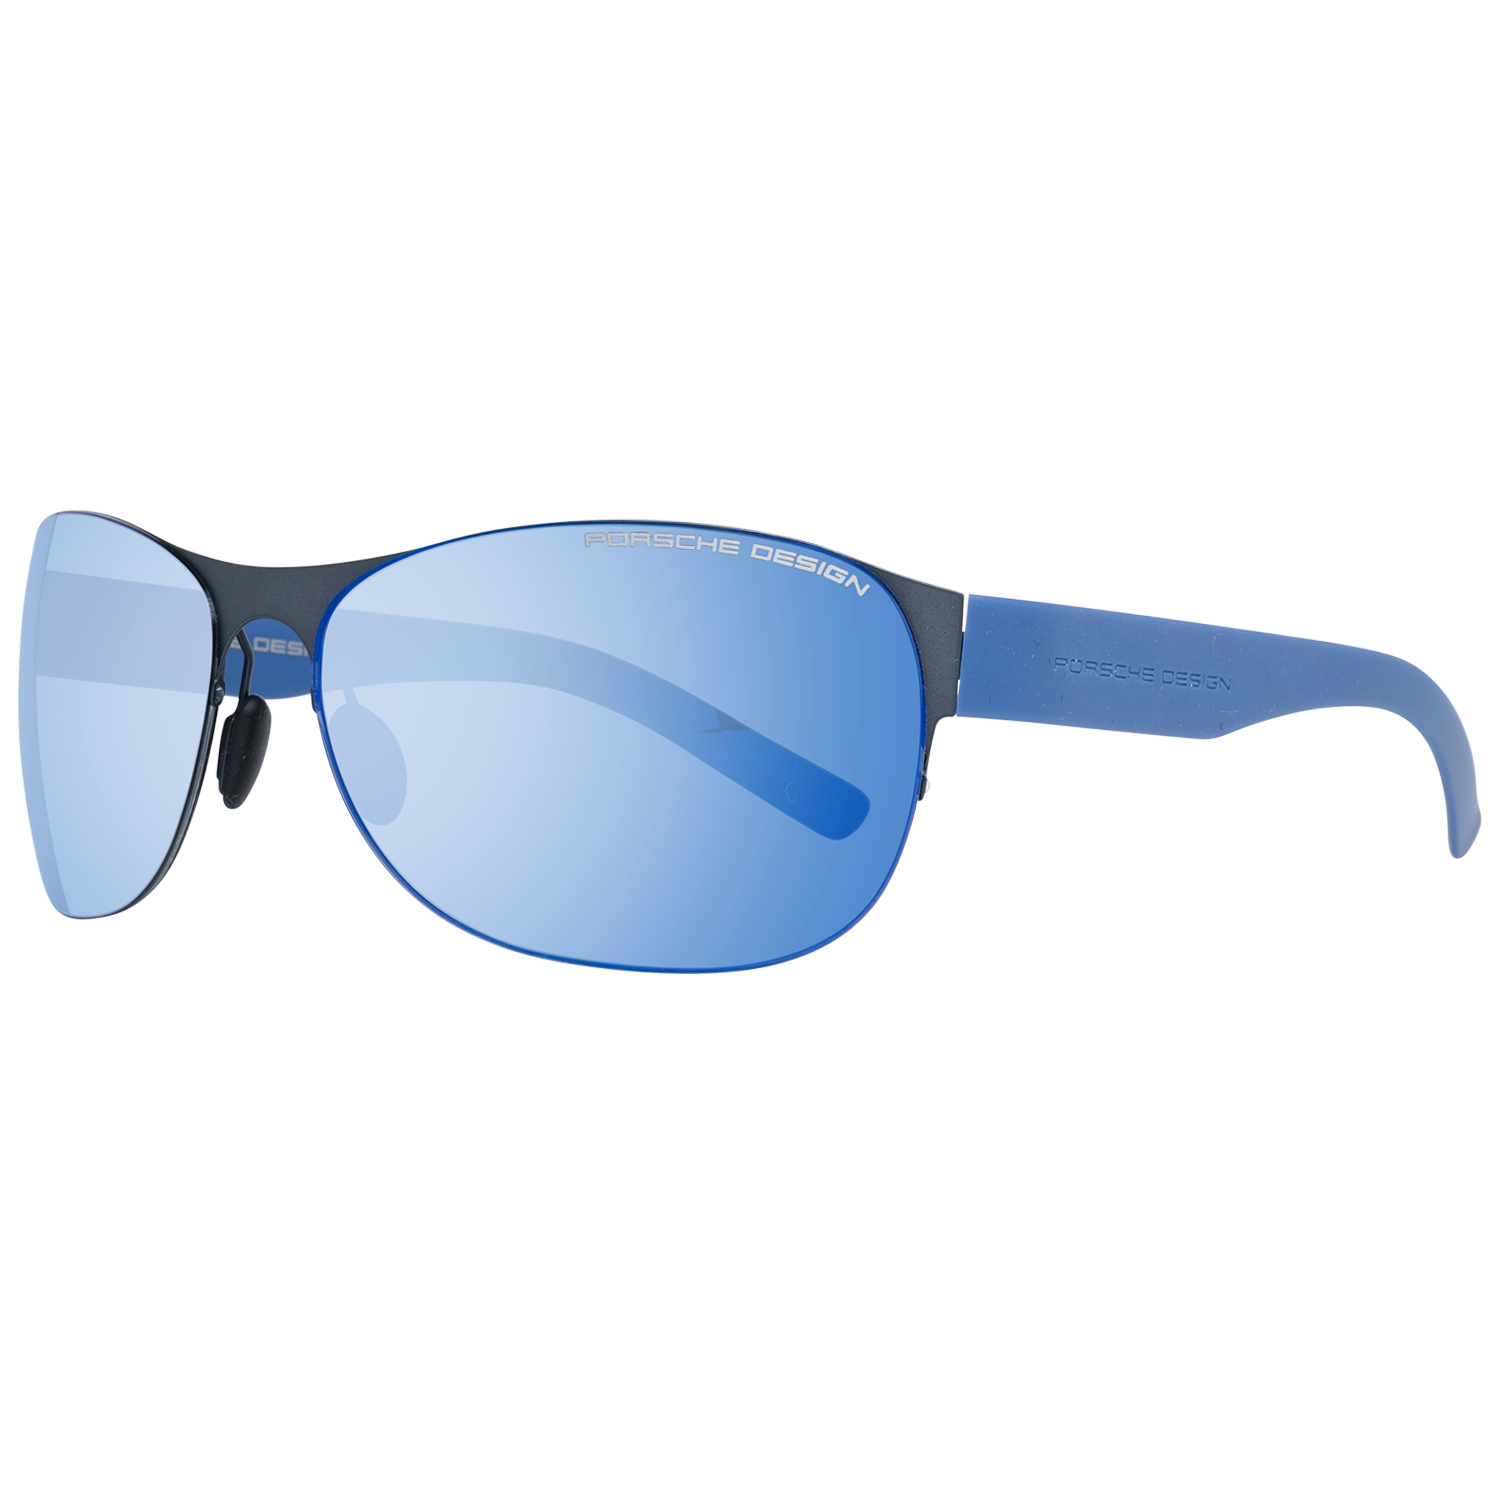 Porsche Design Sunglasses Porsche Design Sunglasses P8581 C 64 Eyeglasses Eyewear UK USA Australia 